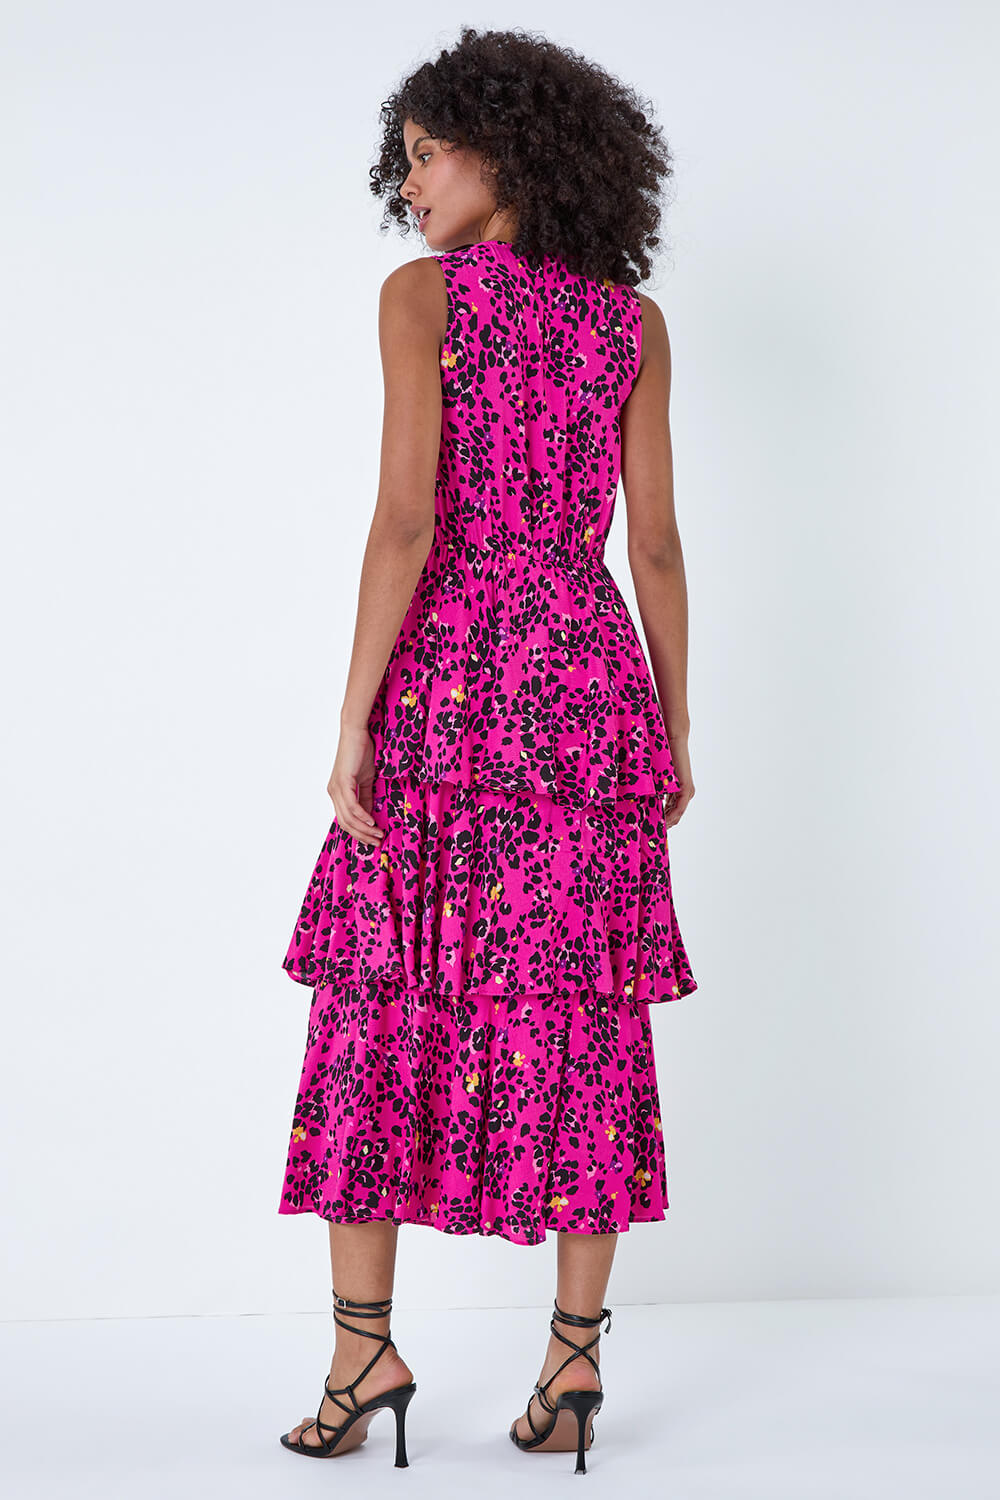 PINK Leopard Print Tiered Midi Dress, Image 3 of 5